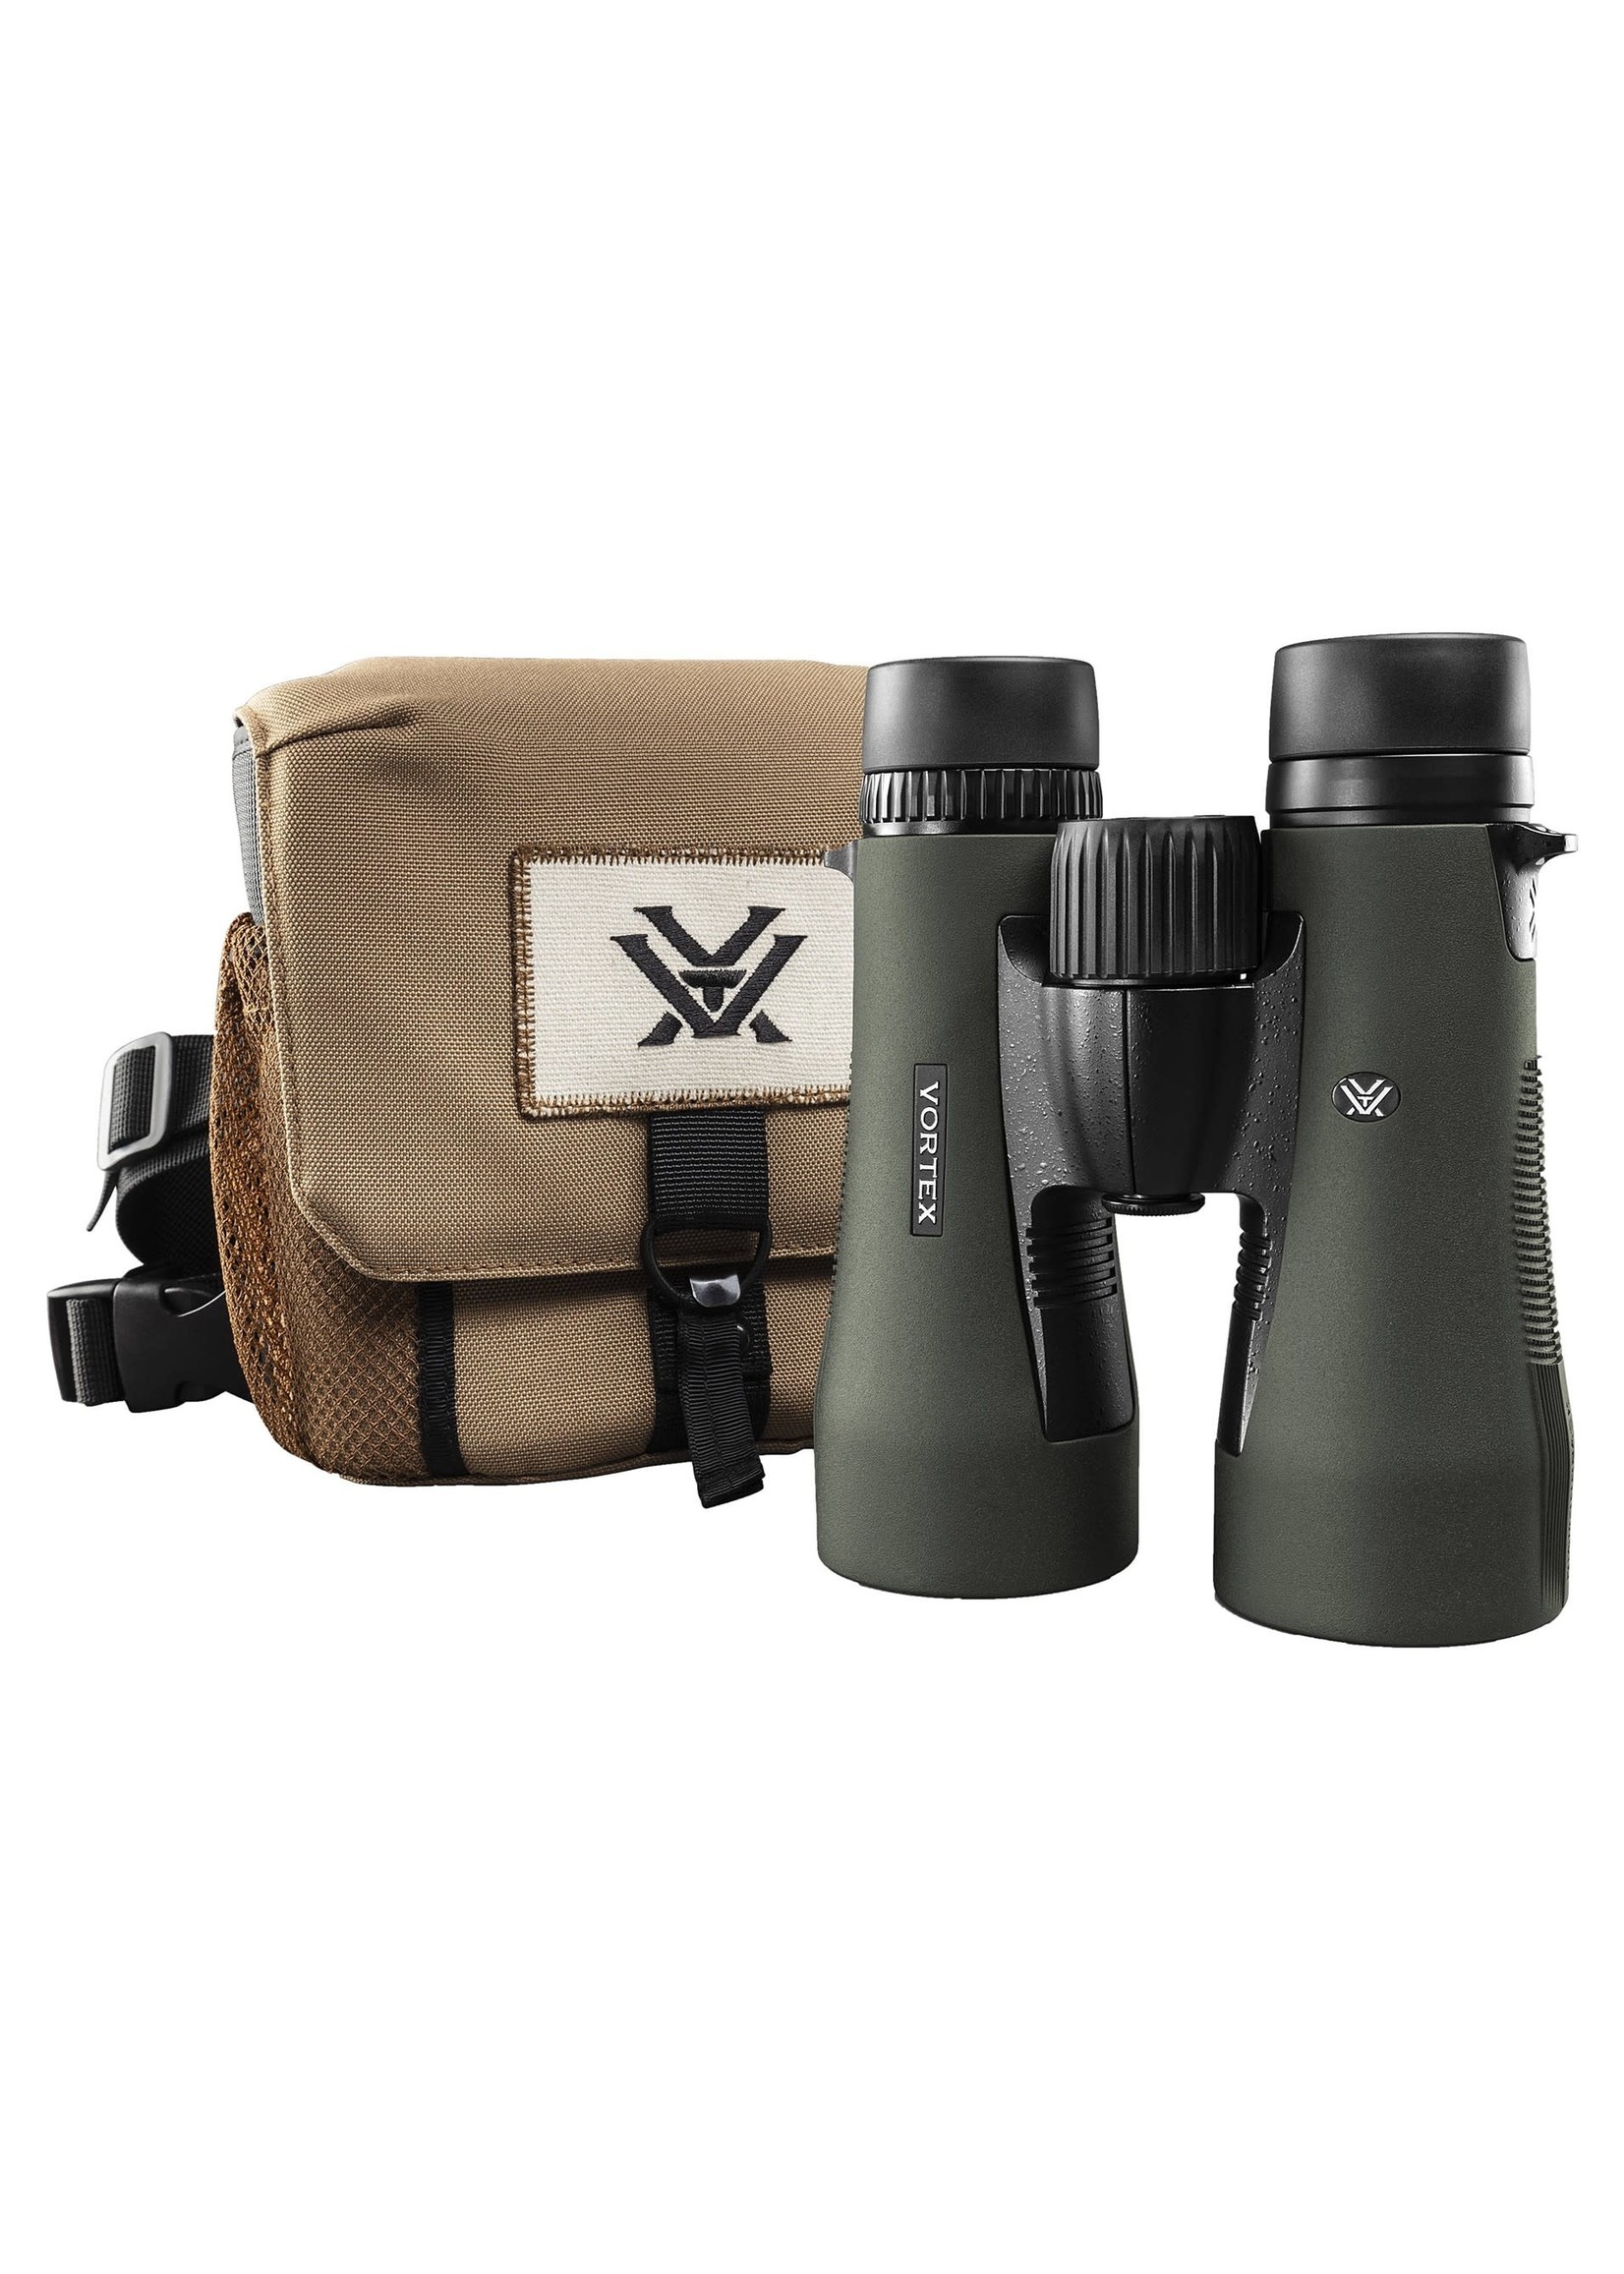 Vortex Vortex Diamondback HD 12x50 Binoculars